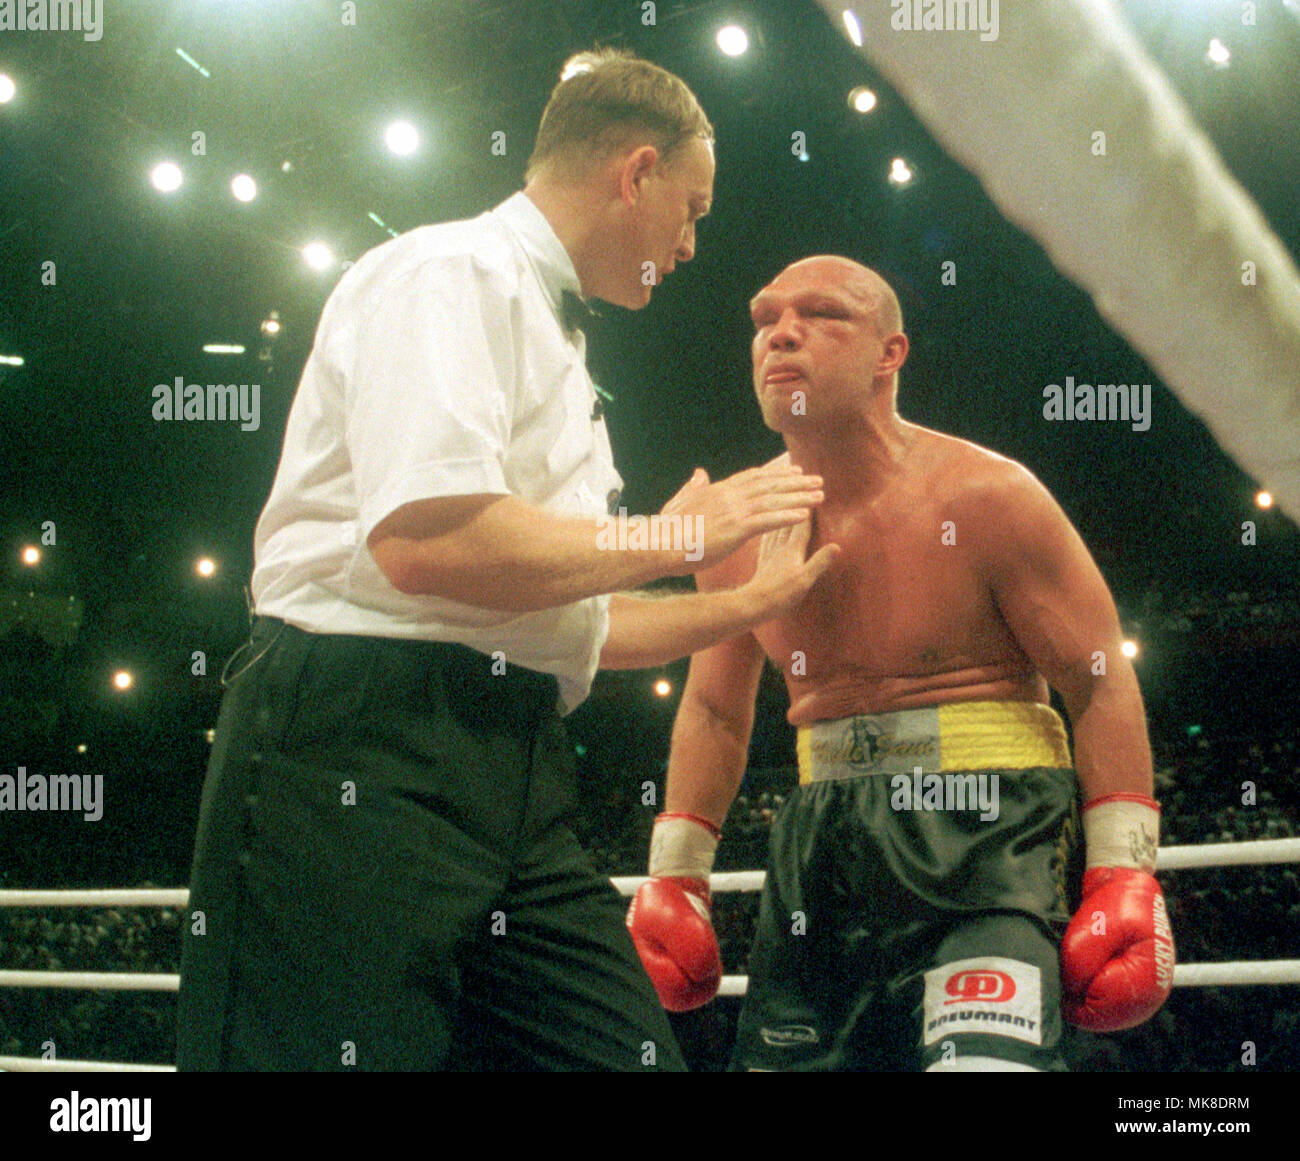 Boxing: Kšln Arena Cologne Germany 25.9.1999, EBU European Championship fight Axel Schulz (GER) vs Wladimir Klitschko (UKR) --- Axel Schulz and referee Daniel VAN DE WIELE Stock Photo